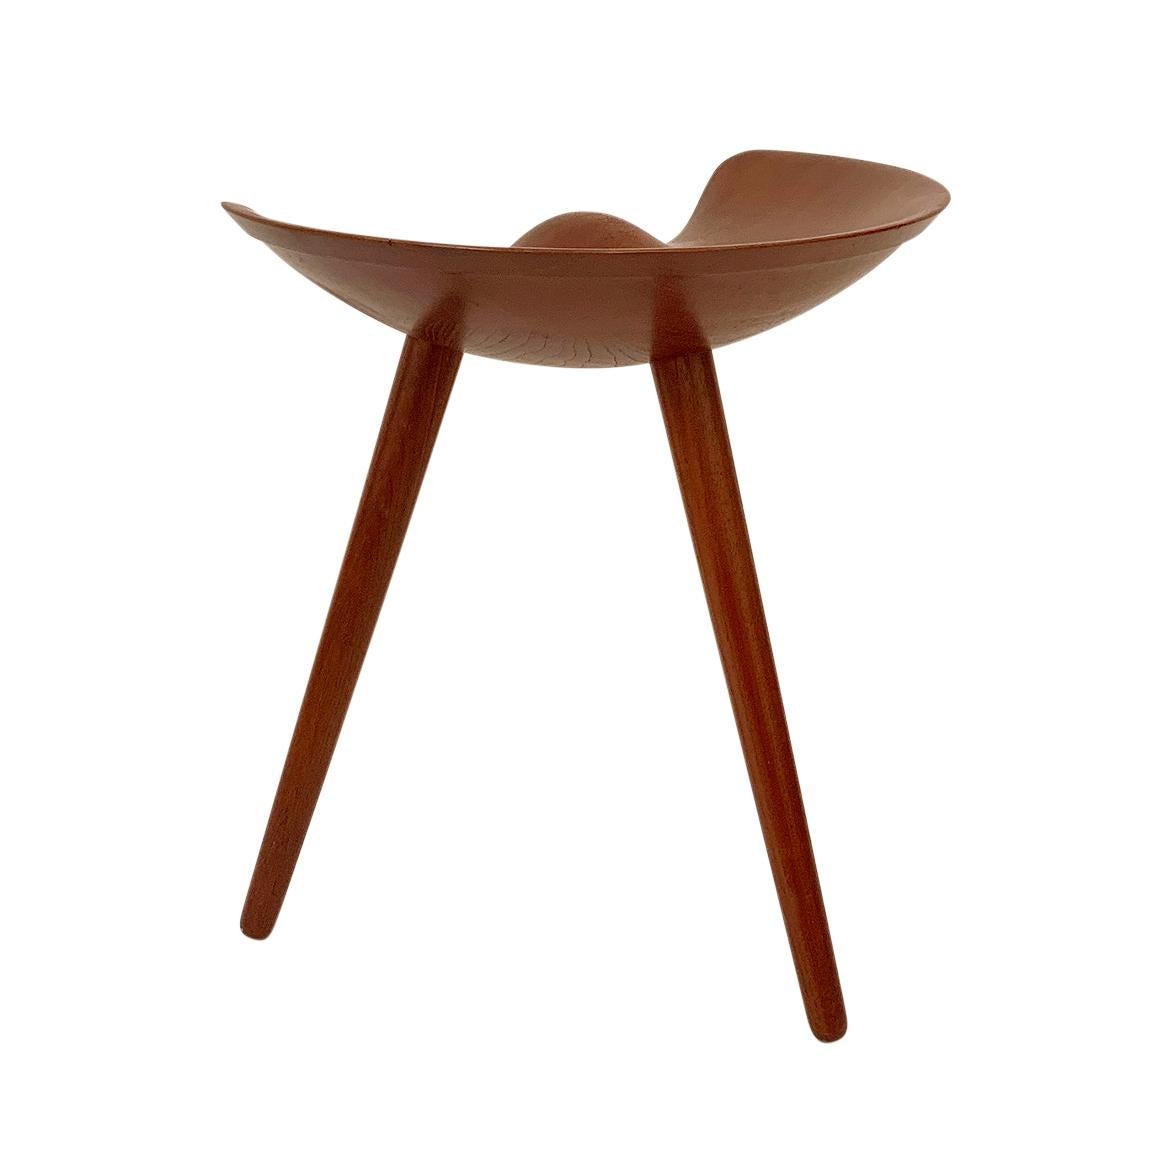 Iconic solid teak stool by Mogens Lassen for cabinetmaker K. Thomsen, Denmark, circa 1942. Stamped 